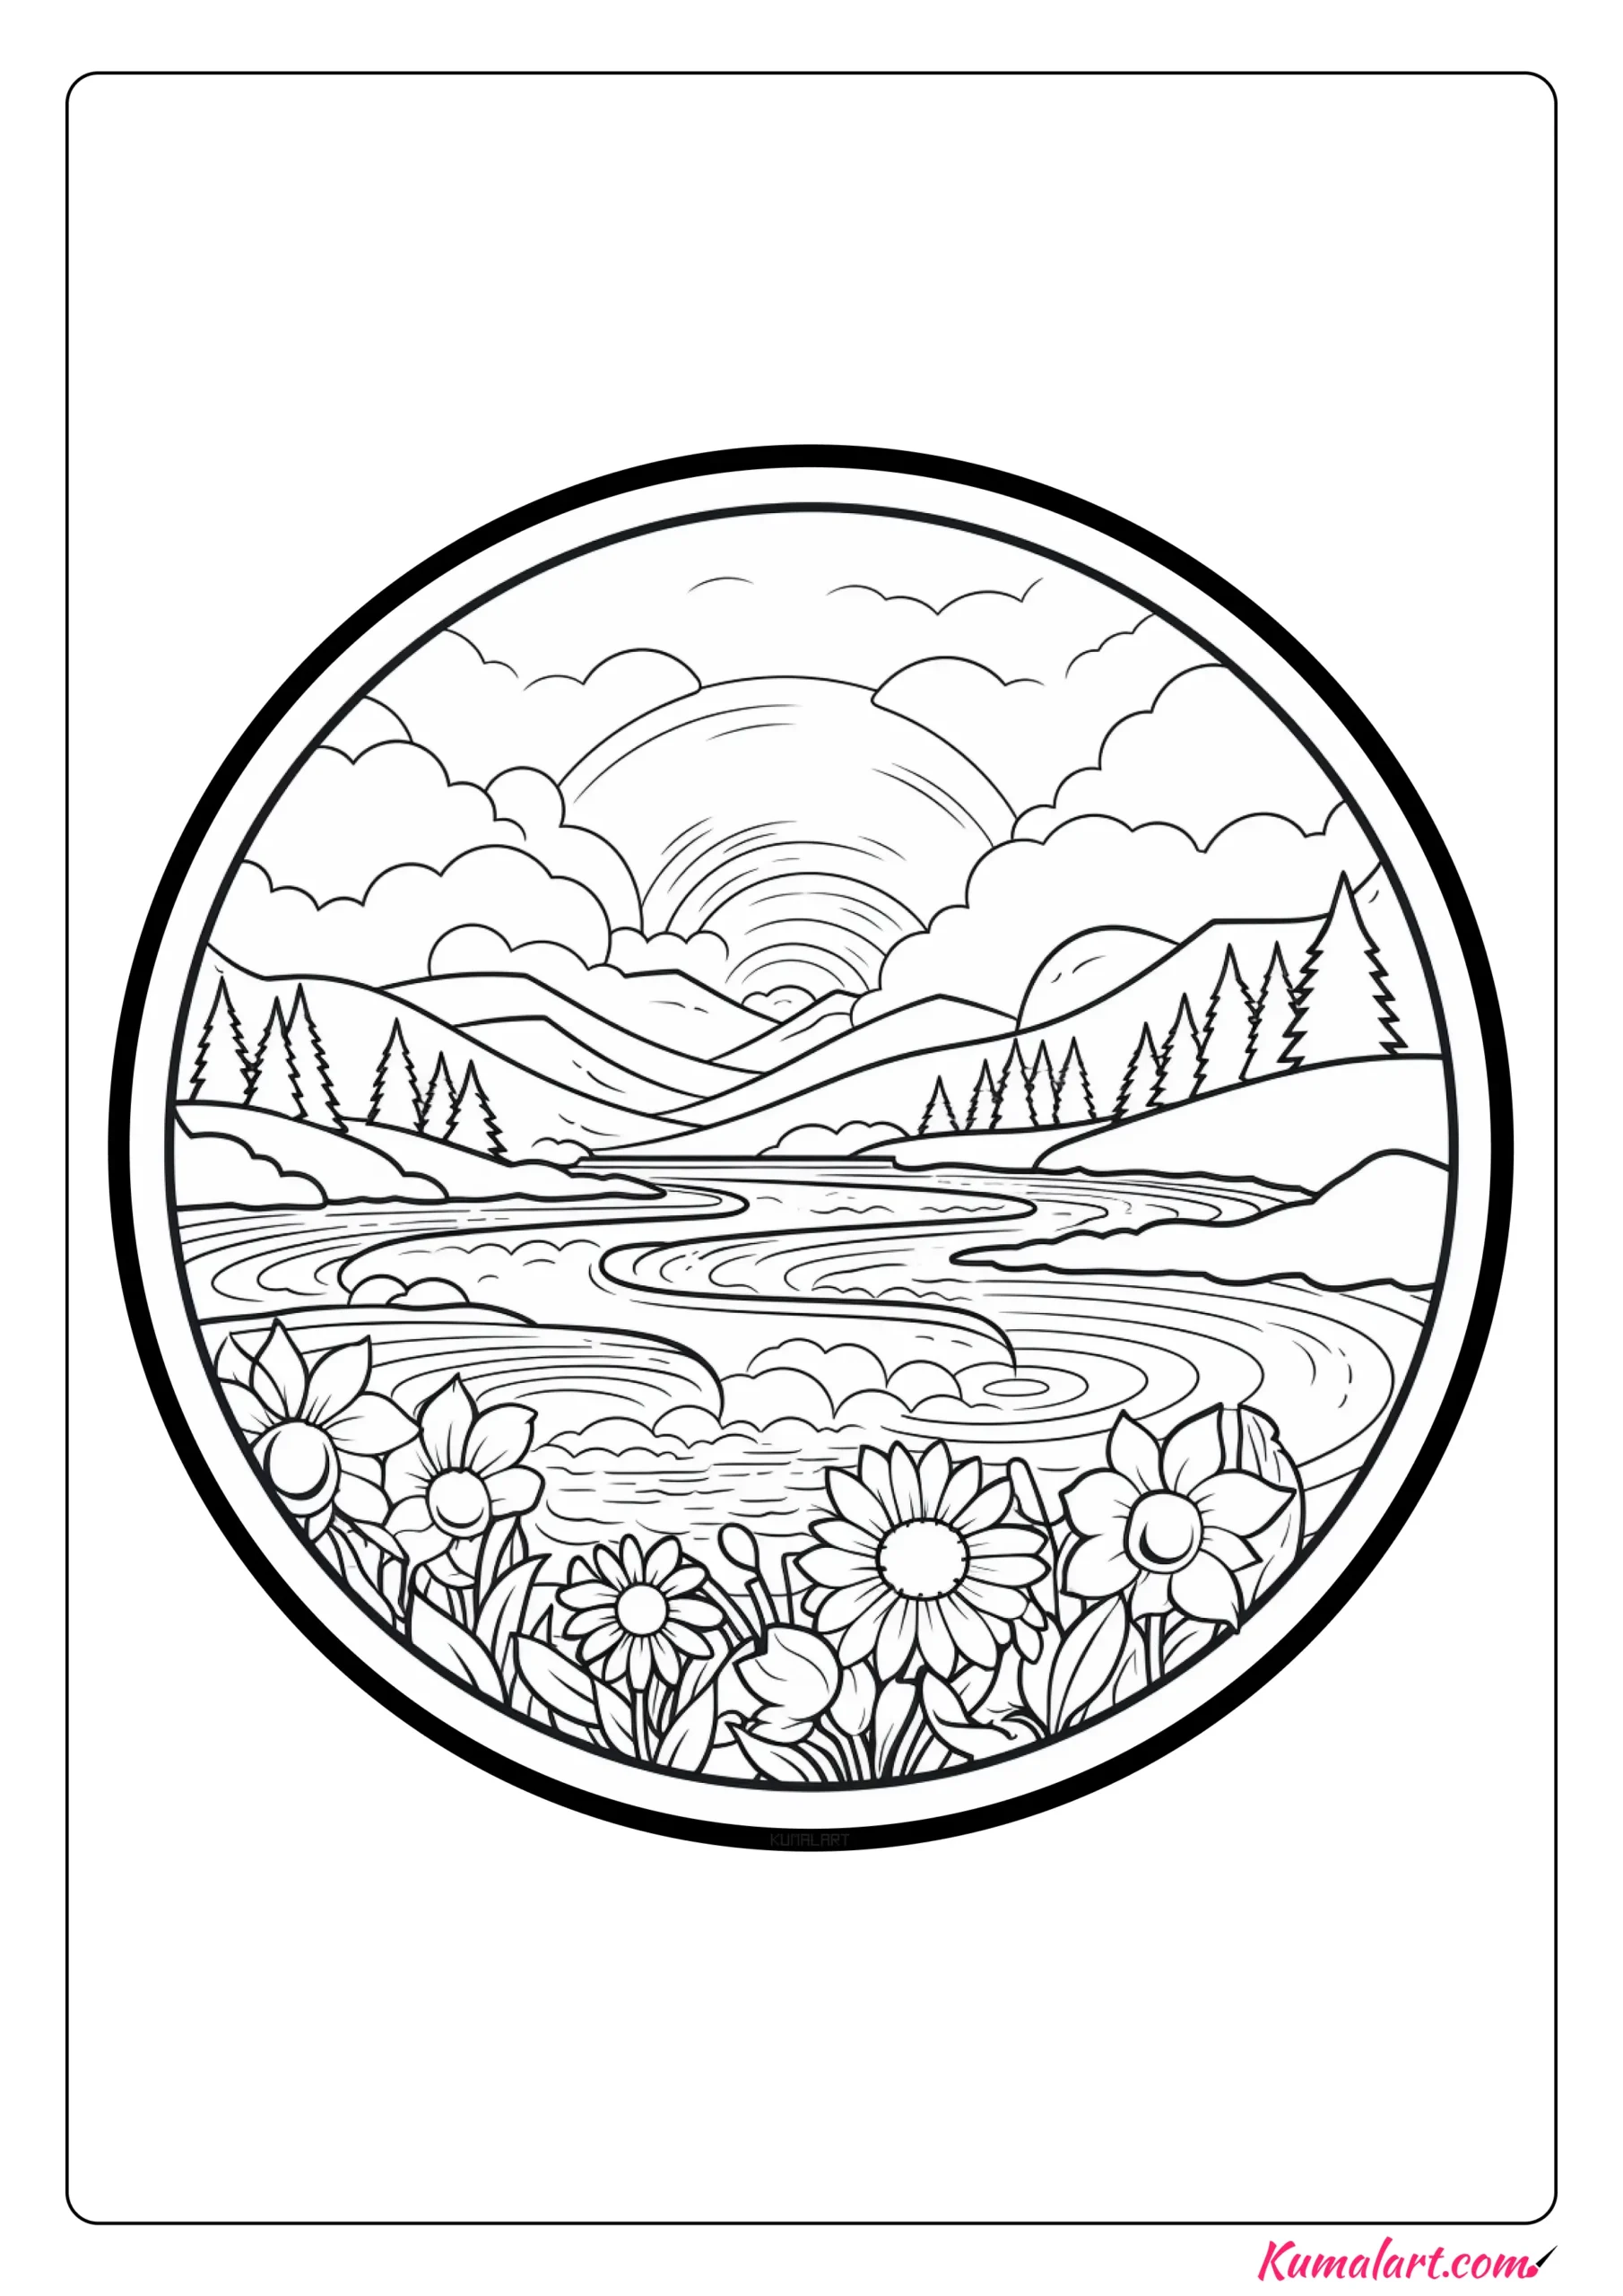 Wild River Mandala Coloring Page